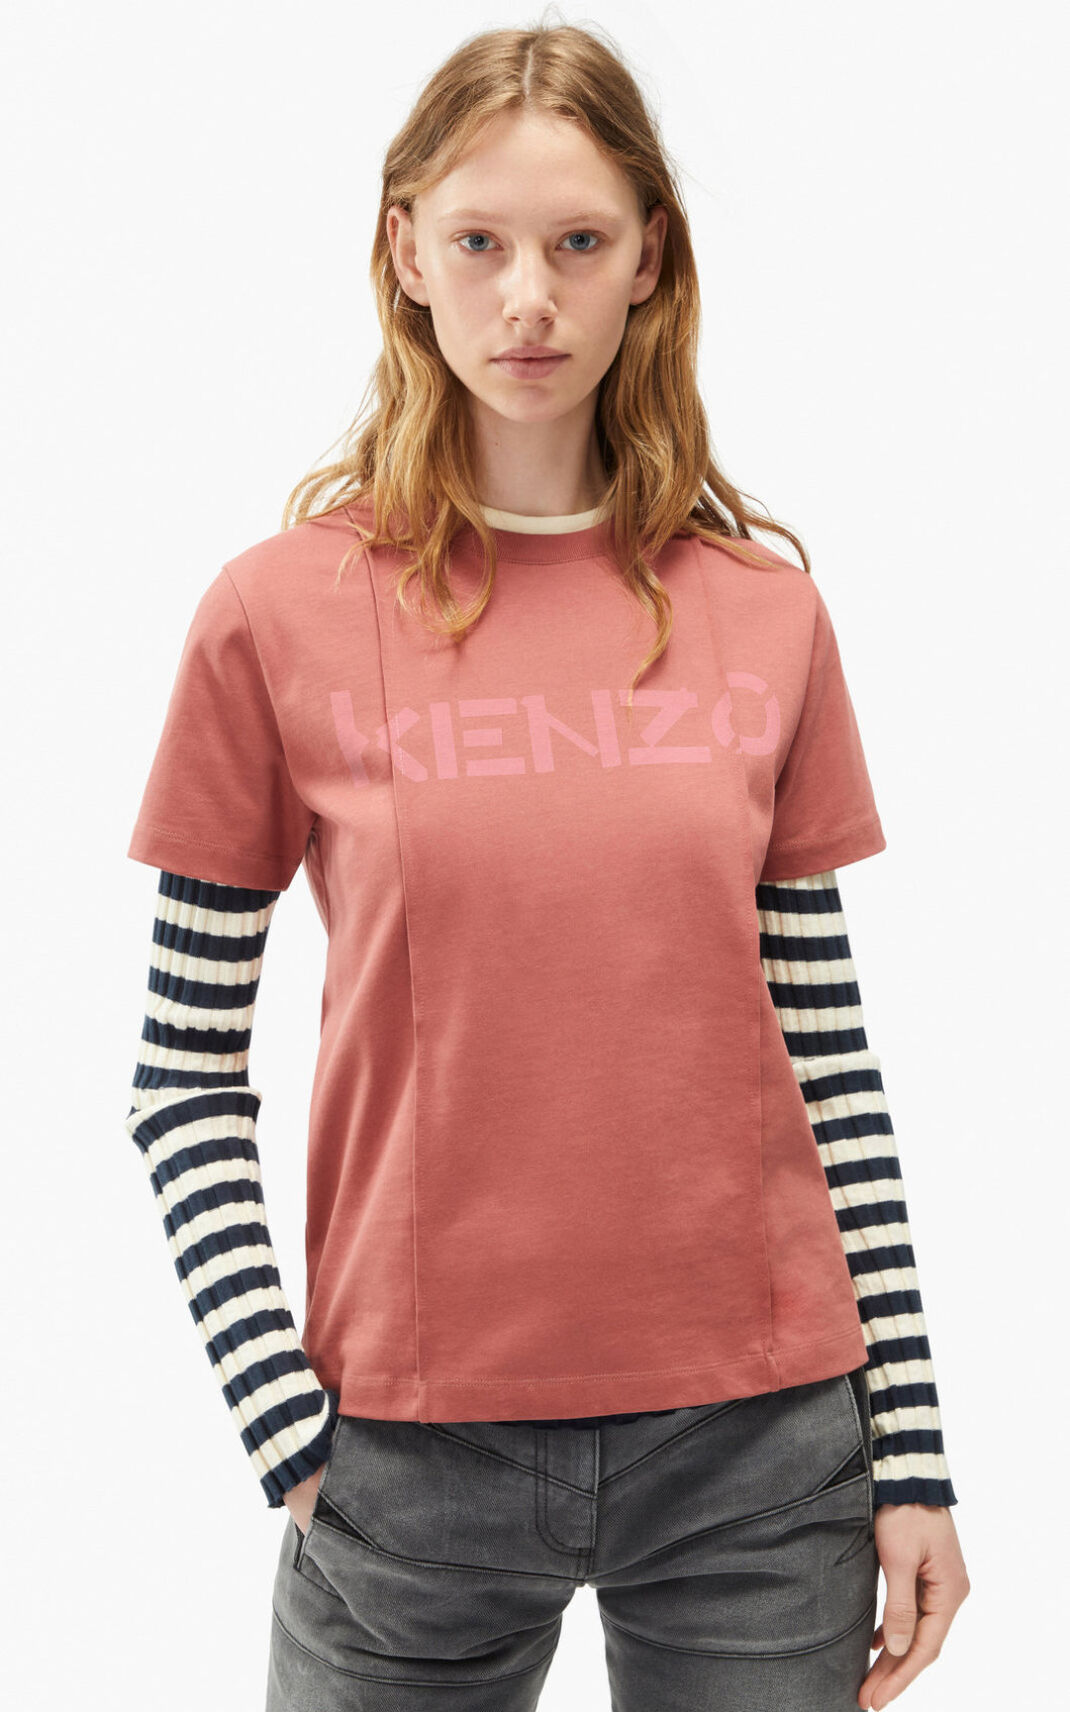 Camisetas Kenzo Logo loose fitting Mujer Rosas Oscuro - SKU.4124927